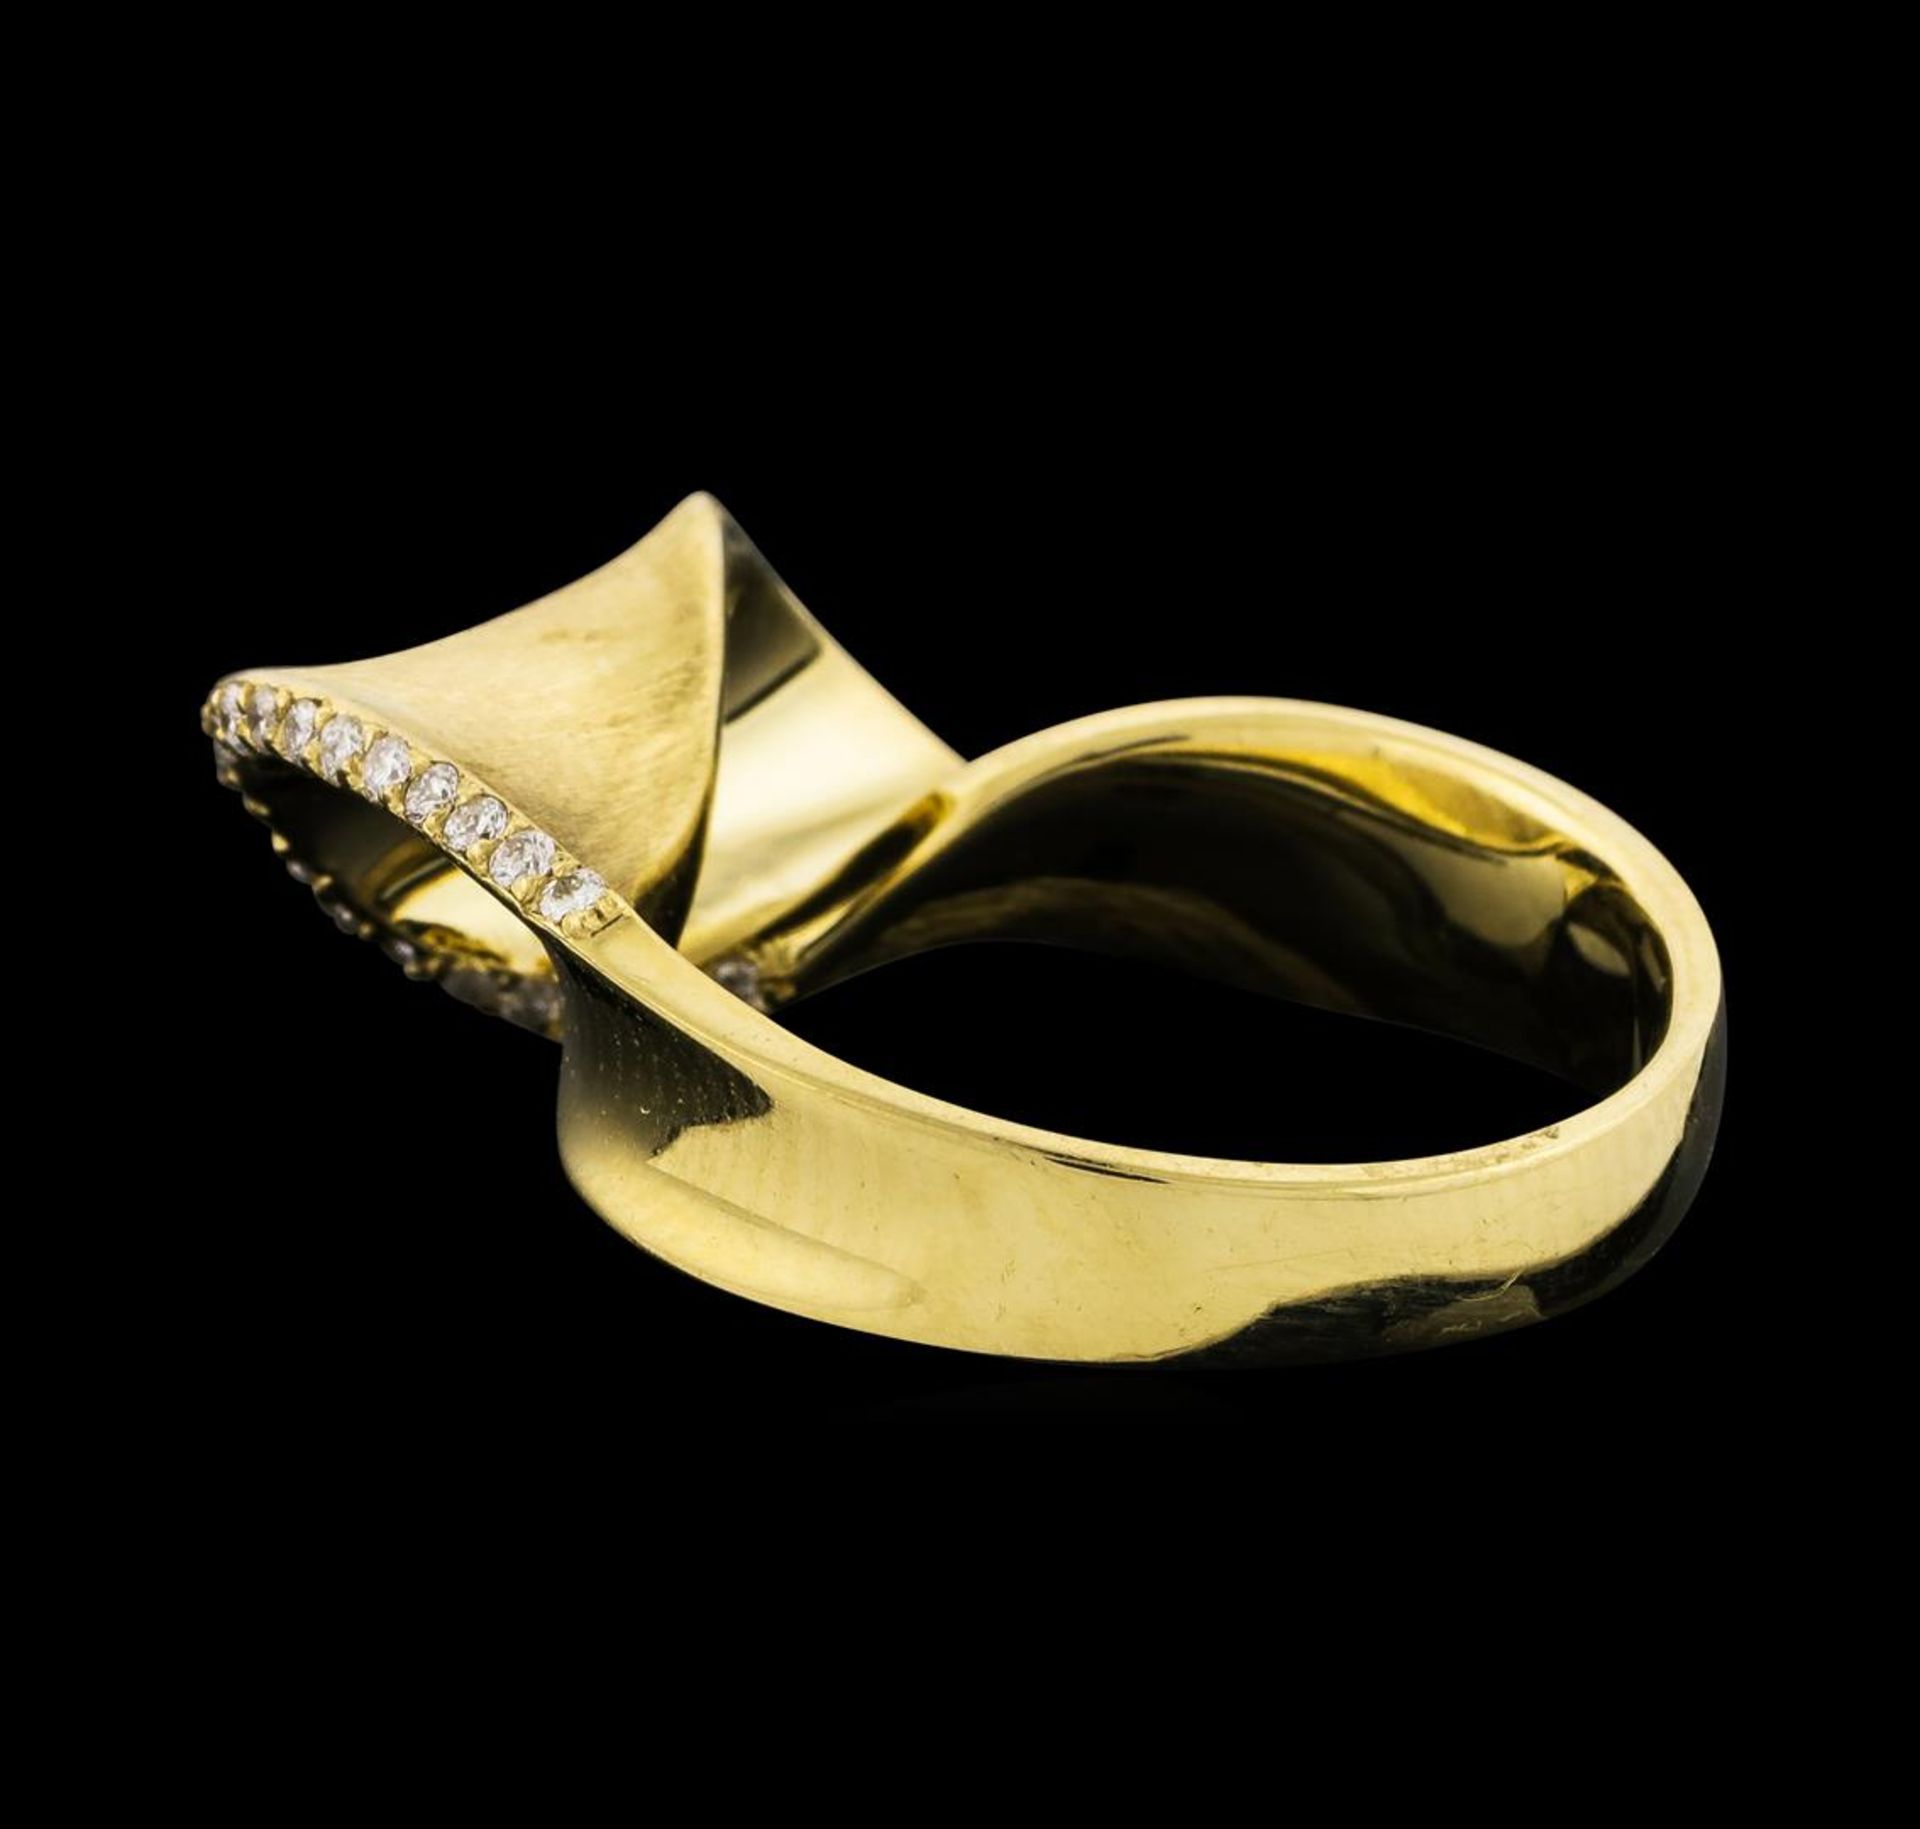 0.15 ctw Diamond Ring - 14KT Yellow Gold - Image 3 of 4